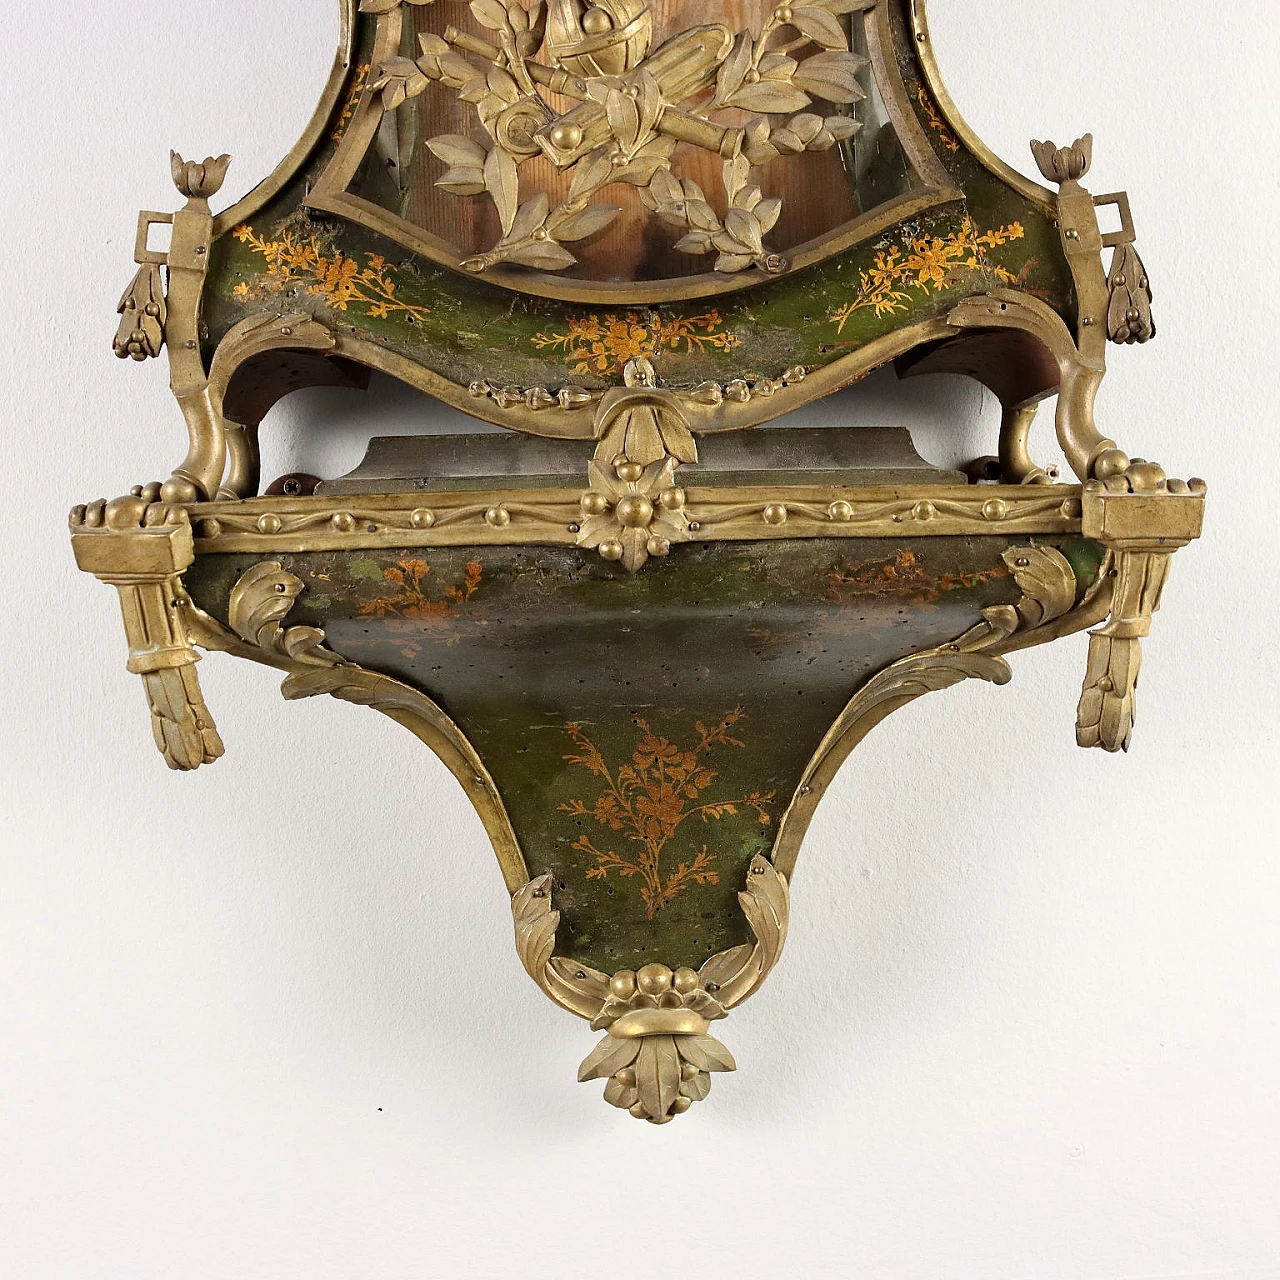 Pendulum on wooden shelf with gold leaf motif decoration, 1700s 7